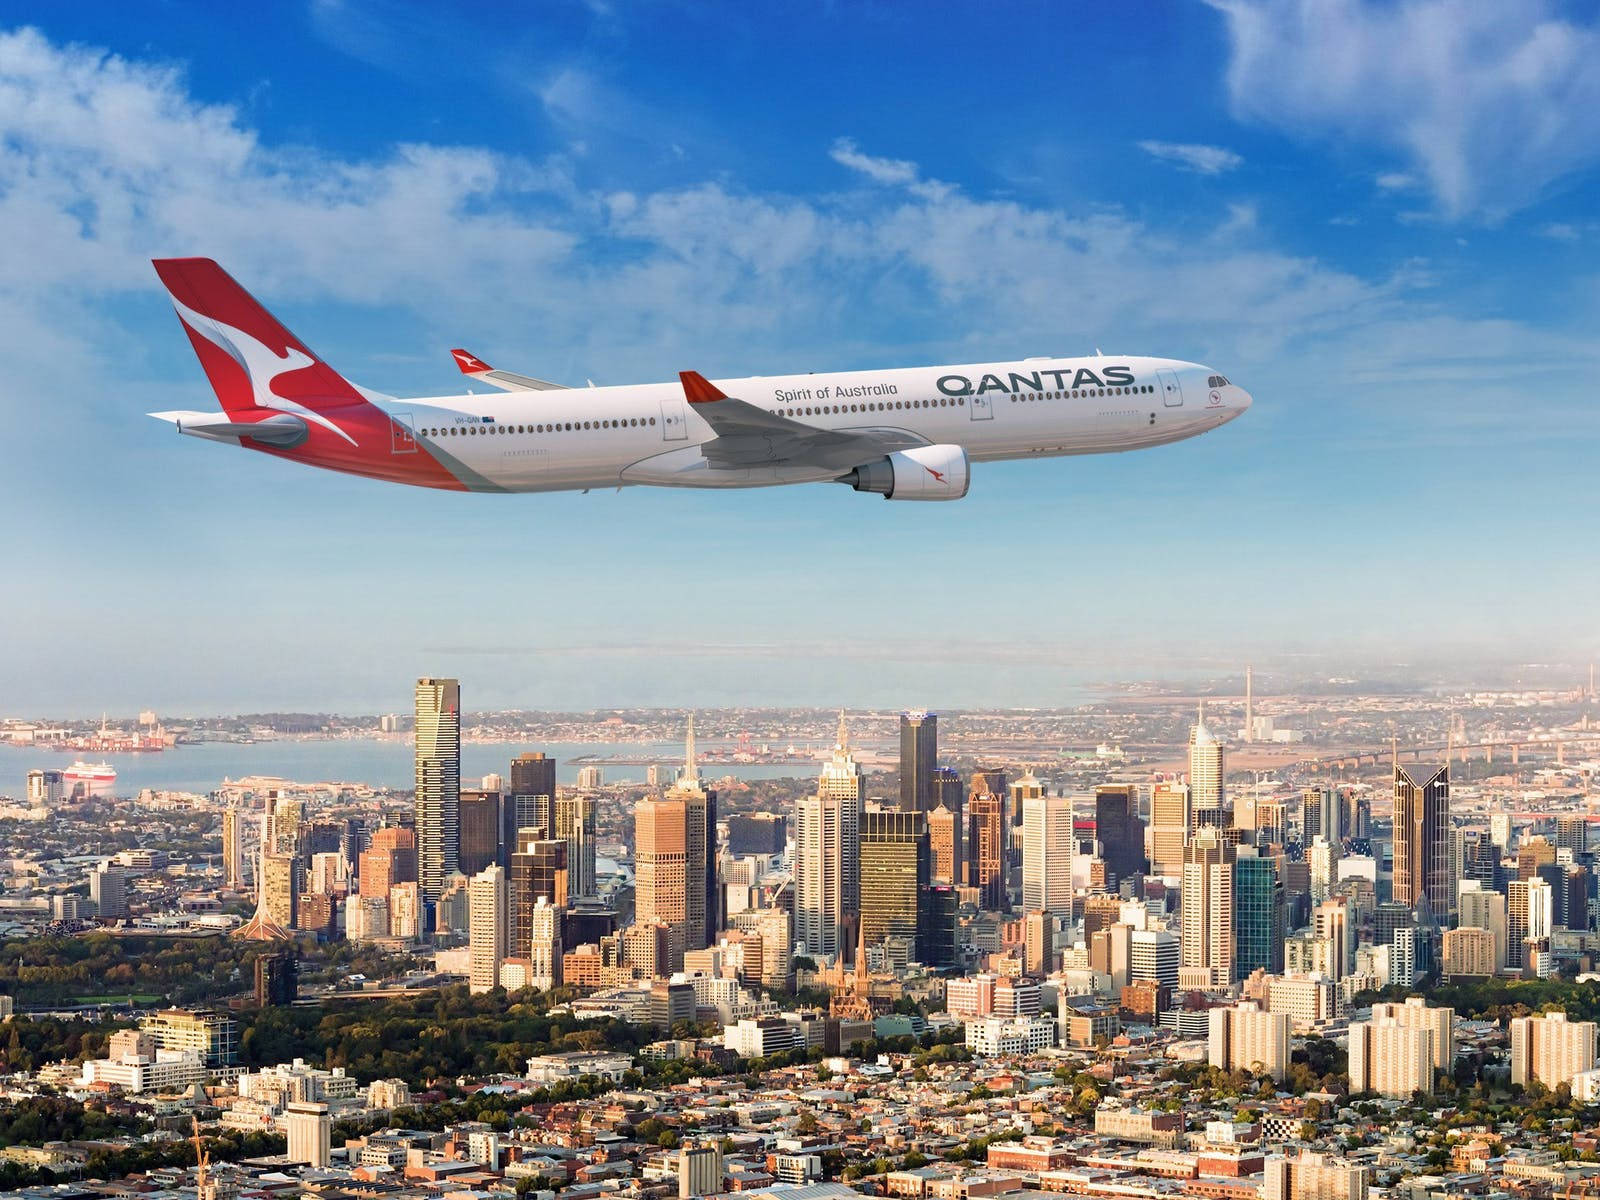 Qantas Passenger Airplane Over The City Wallpaper